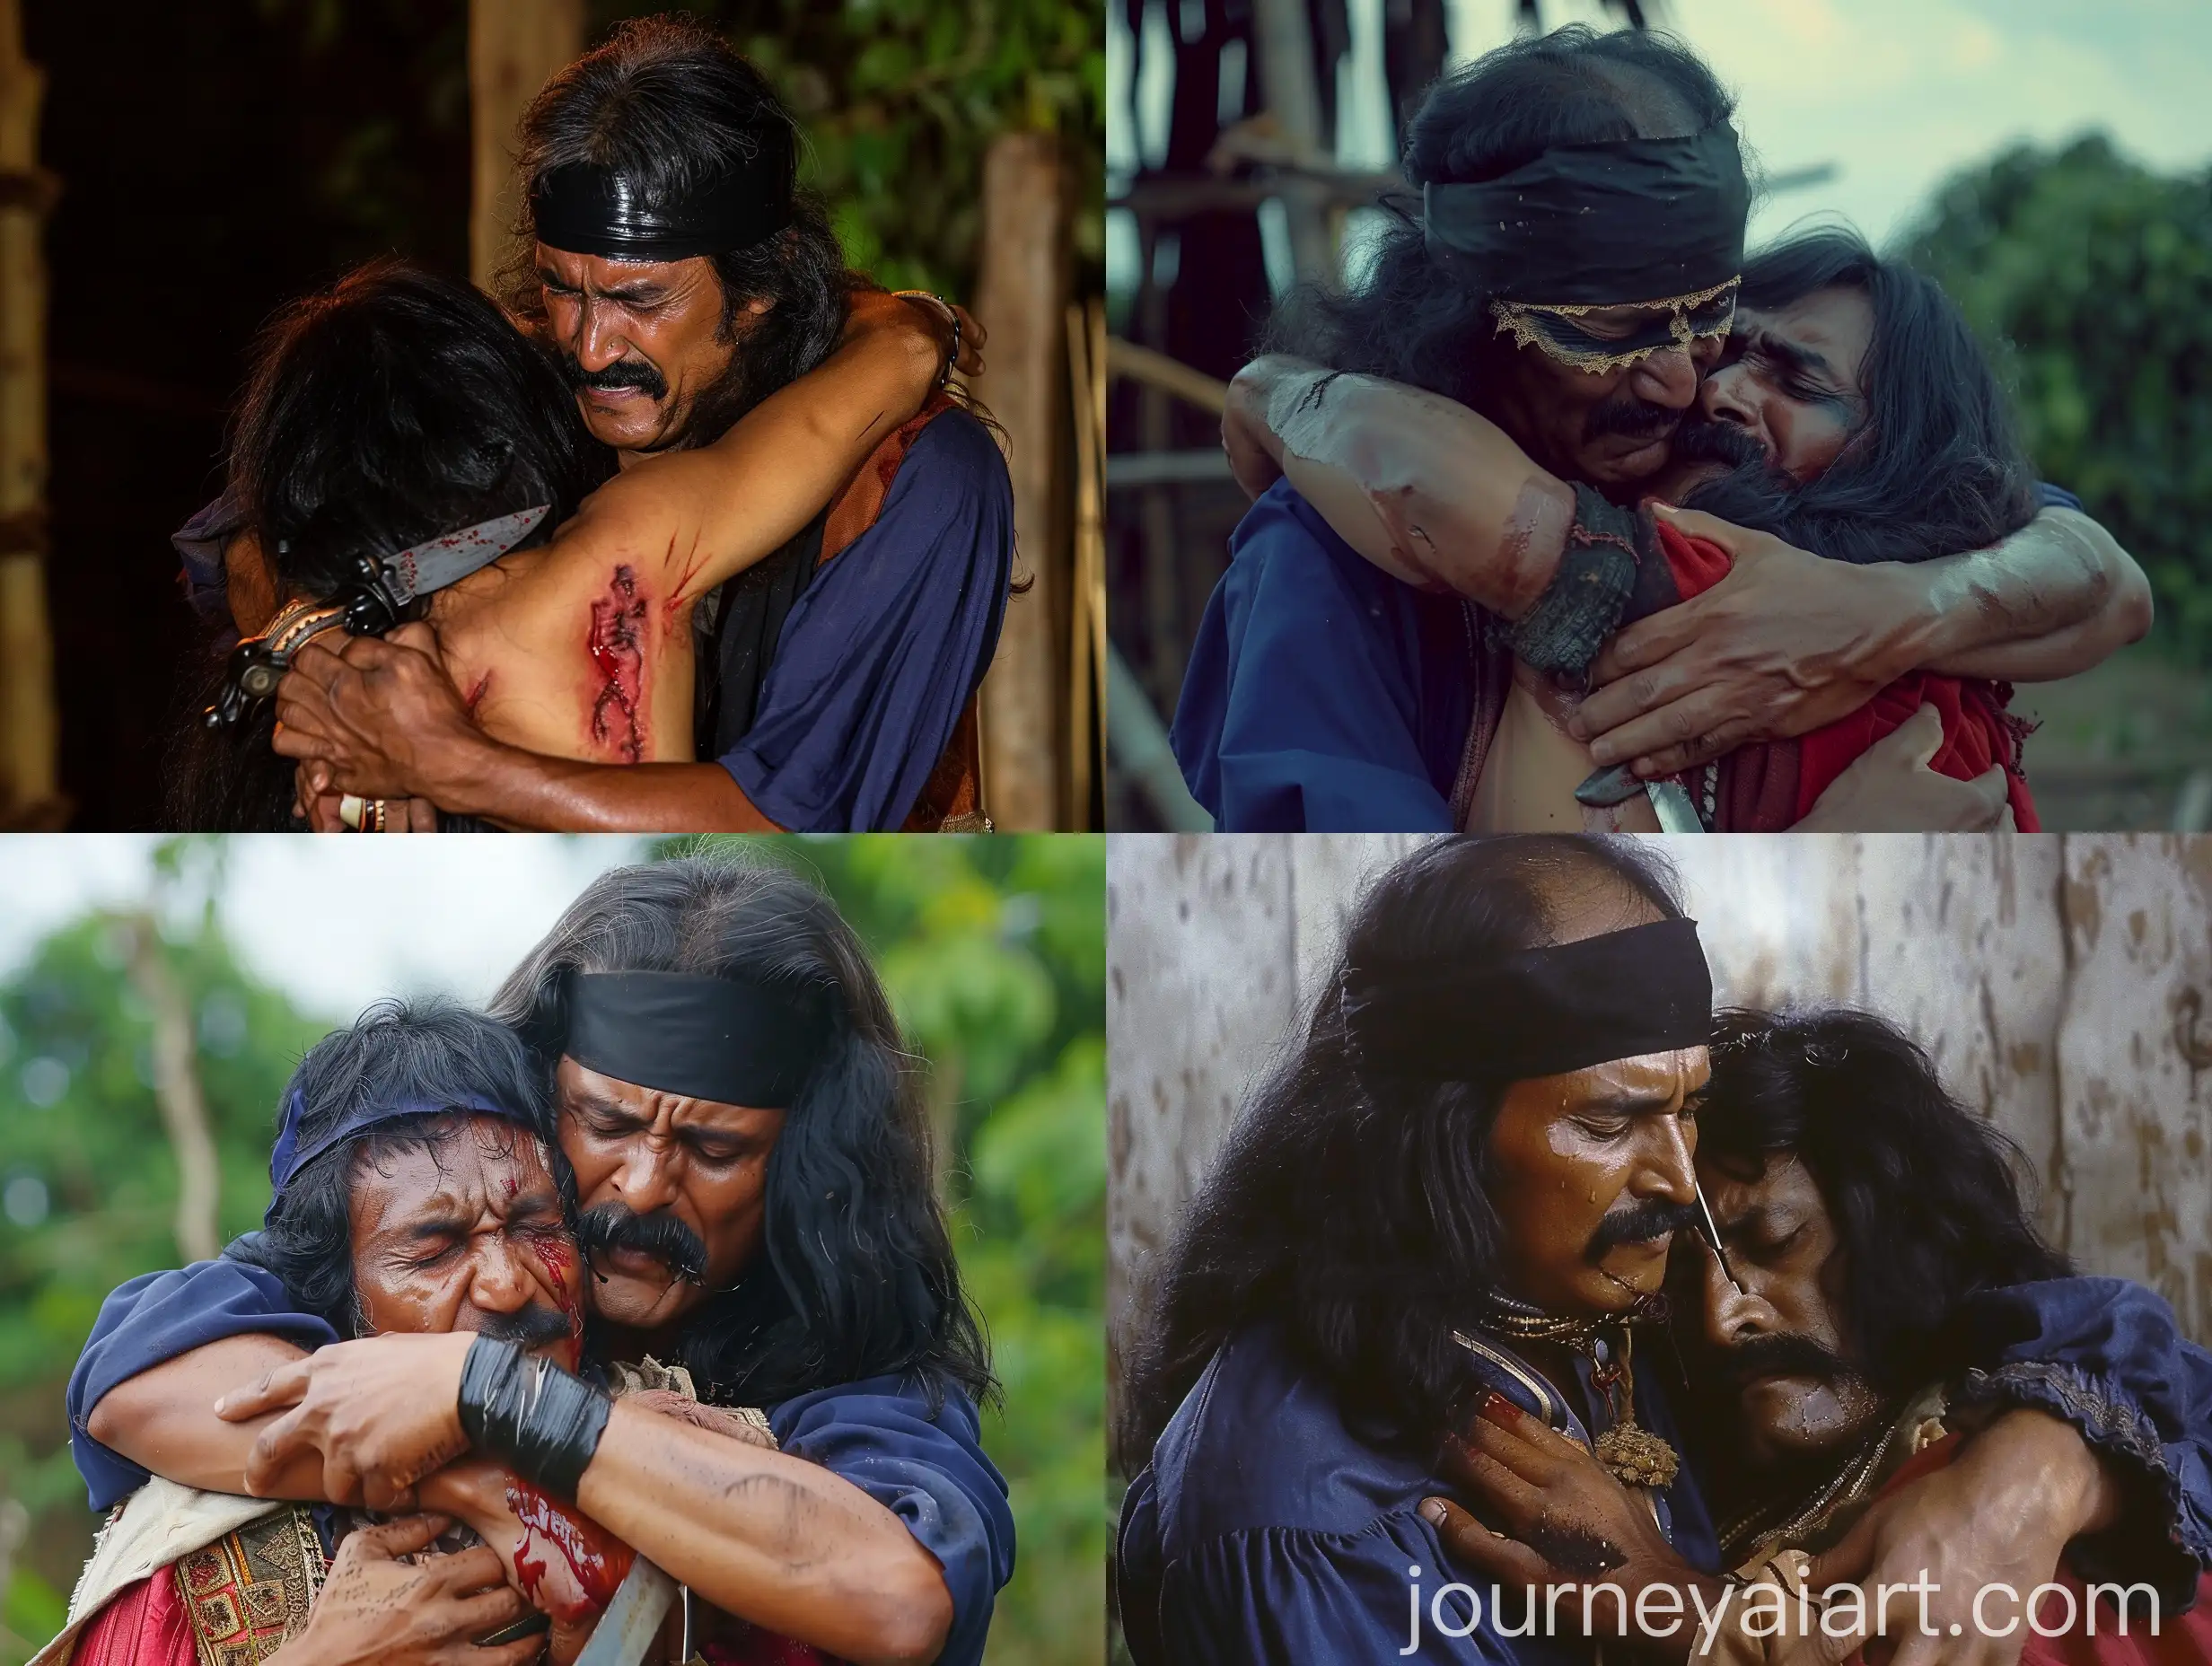 Indonesian-Kingdom-Warrior-Embracing-Wounded-Companion